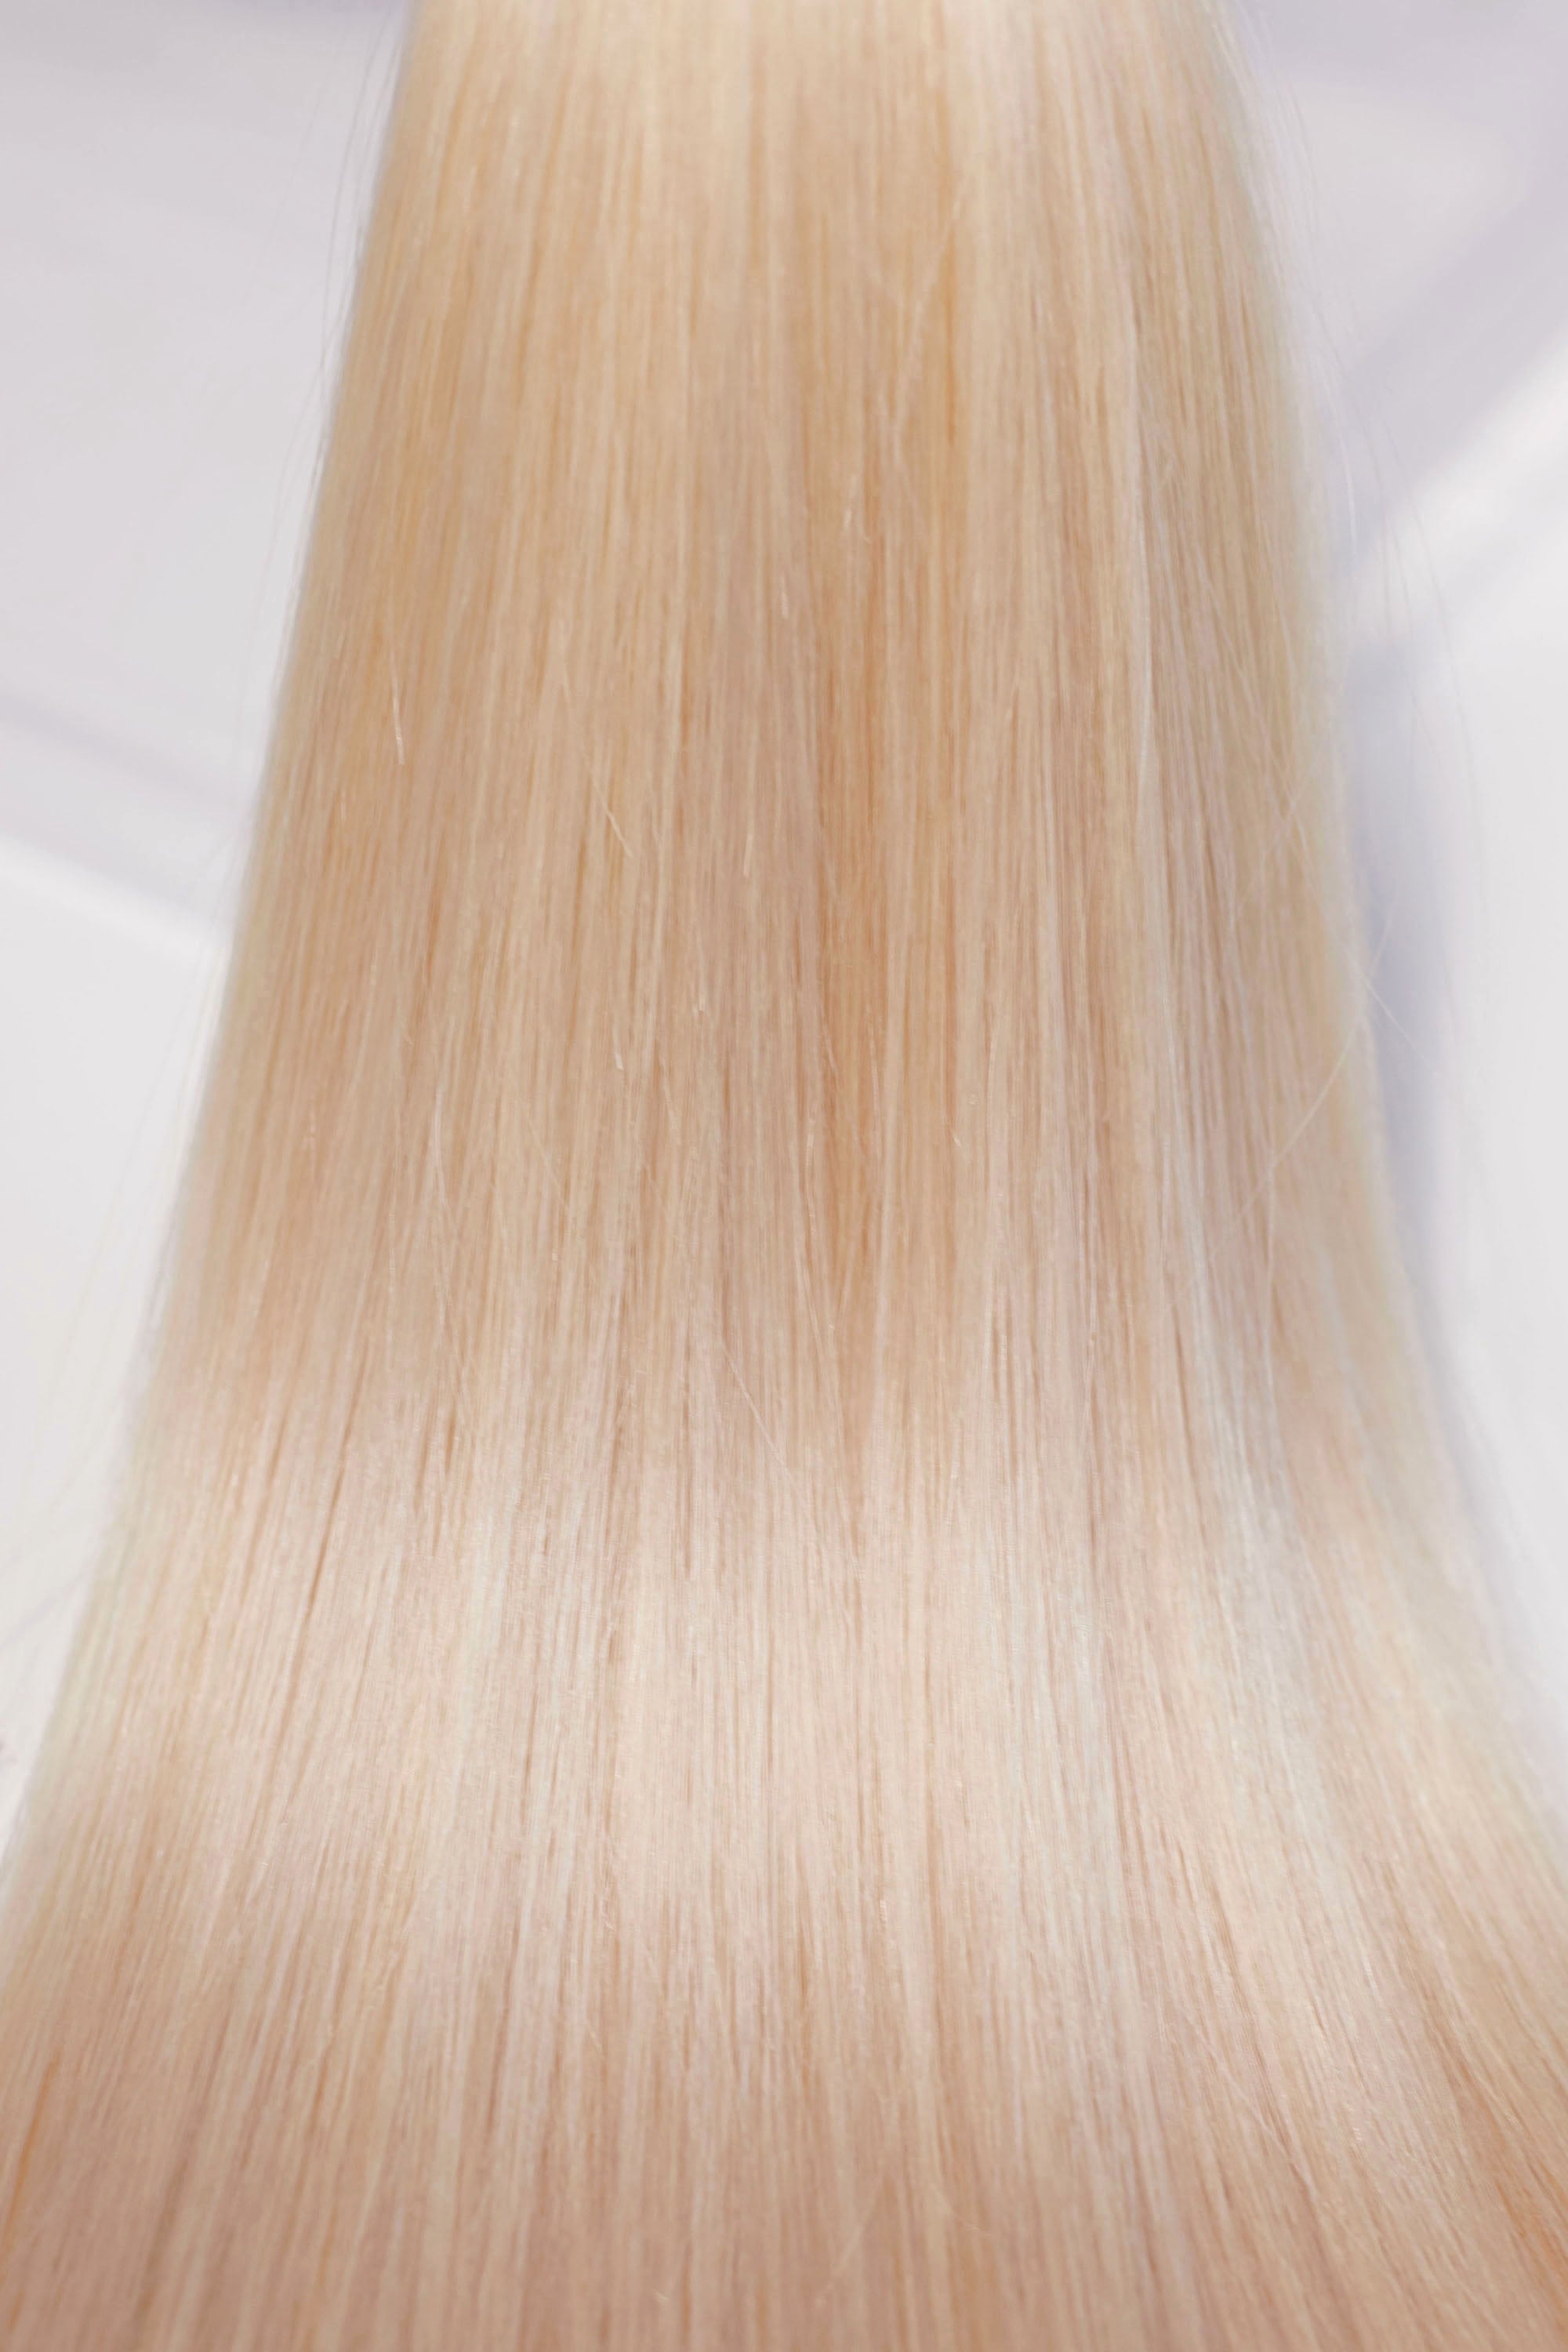 Behair professional Keratin Tip "Premium" 28" (70cm) Natural Straight Platinum Blond #60 - 25g (Standart - 0.7g each pcs) hair extensions